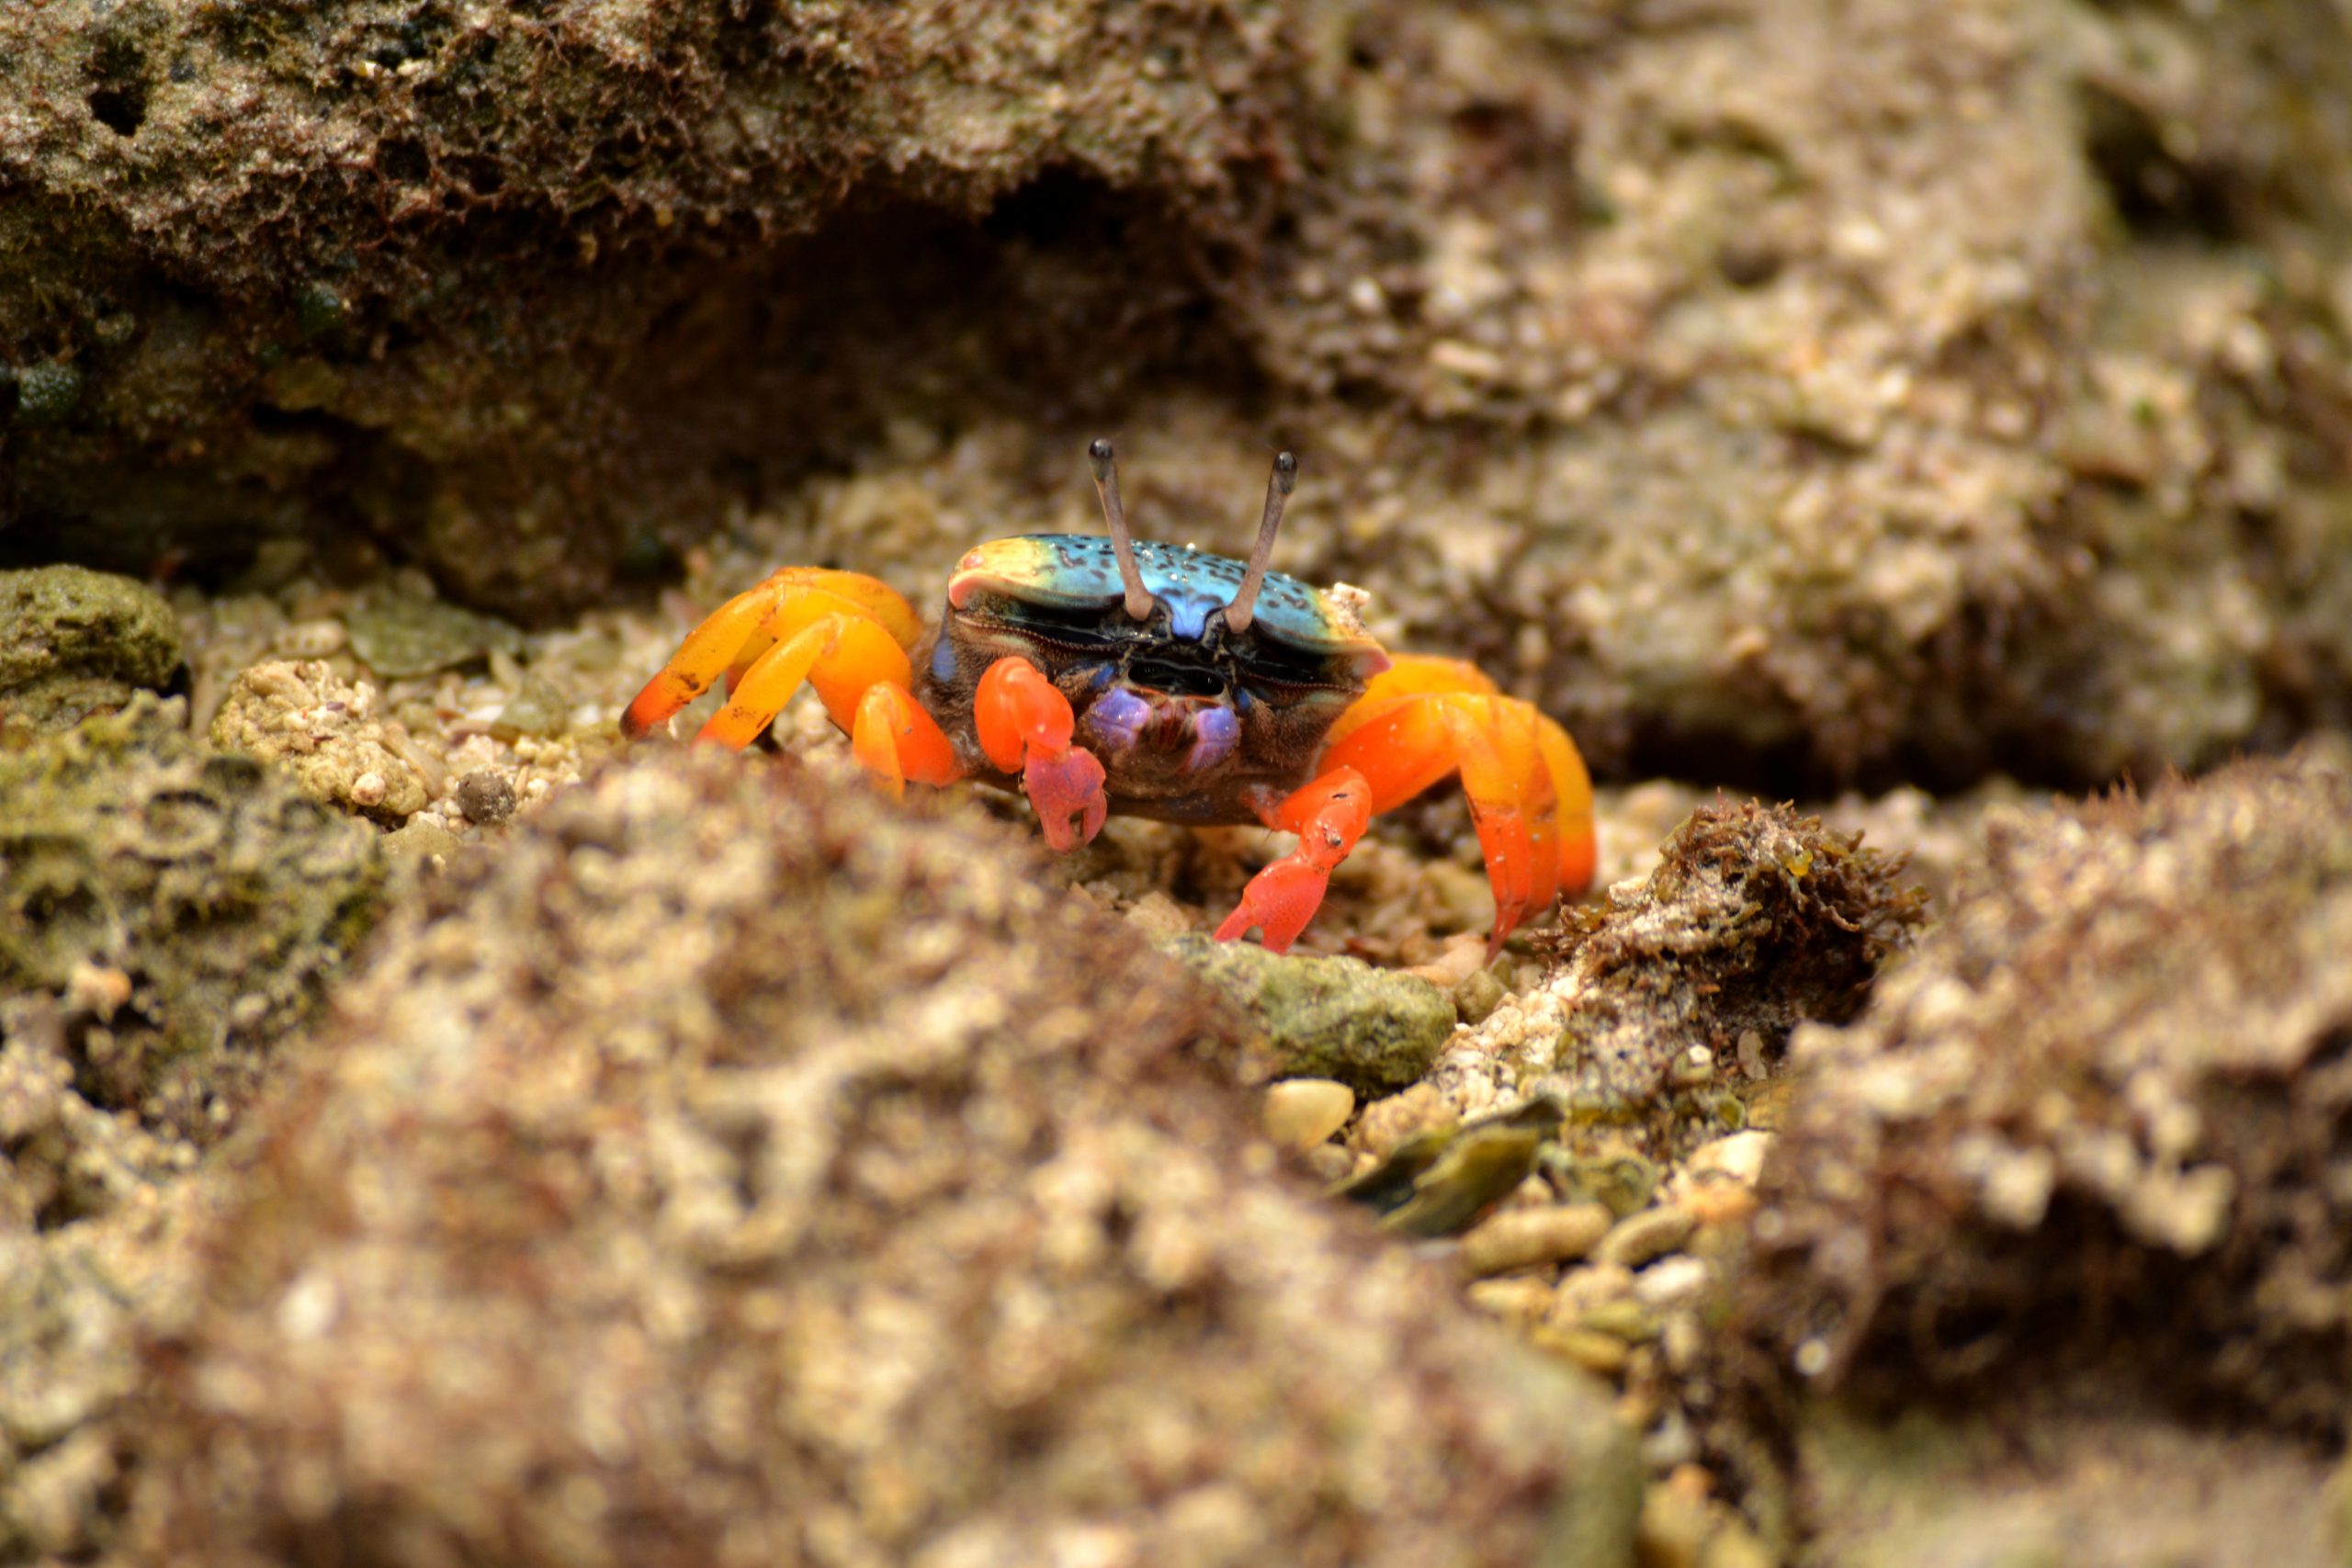 Crab on rocks